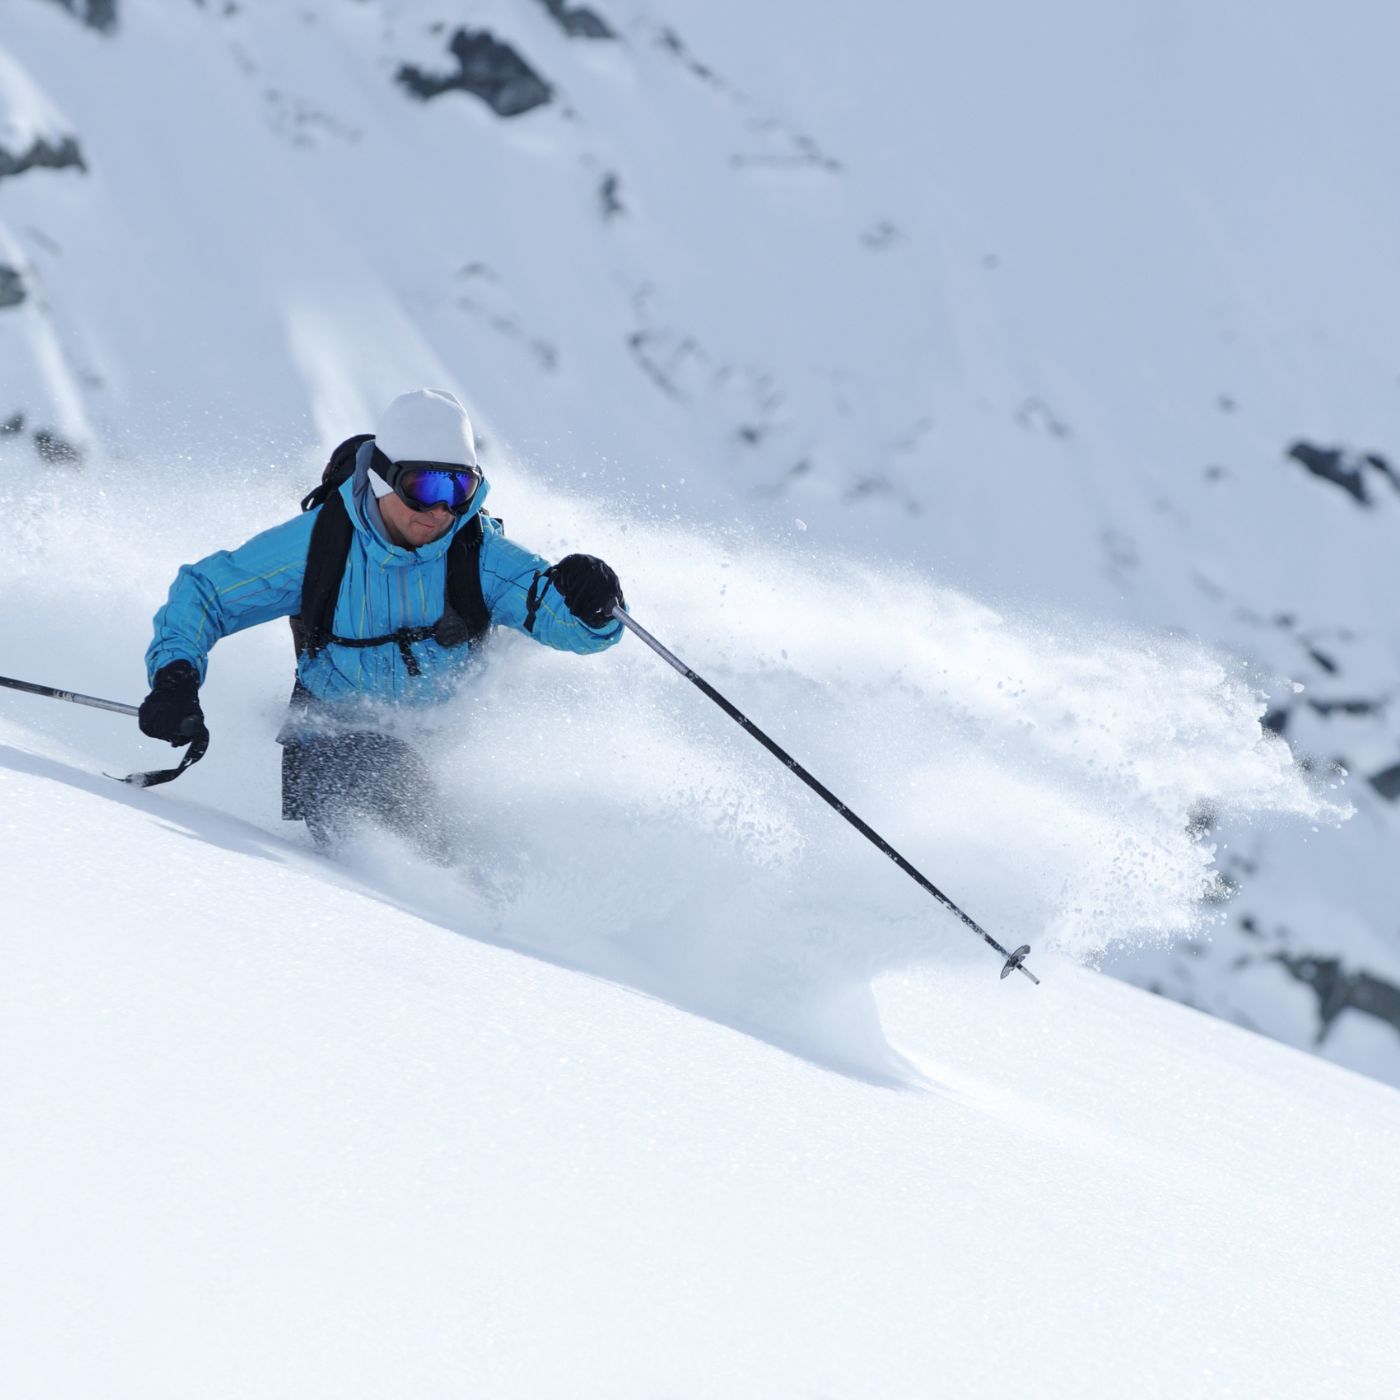 Backcountry skiing, snowfeet walkski backcountry skis, winter, adventures, short skis